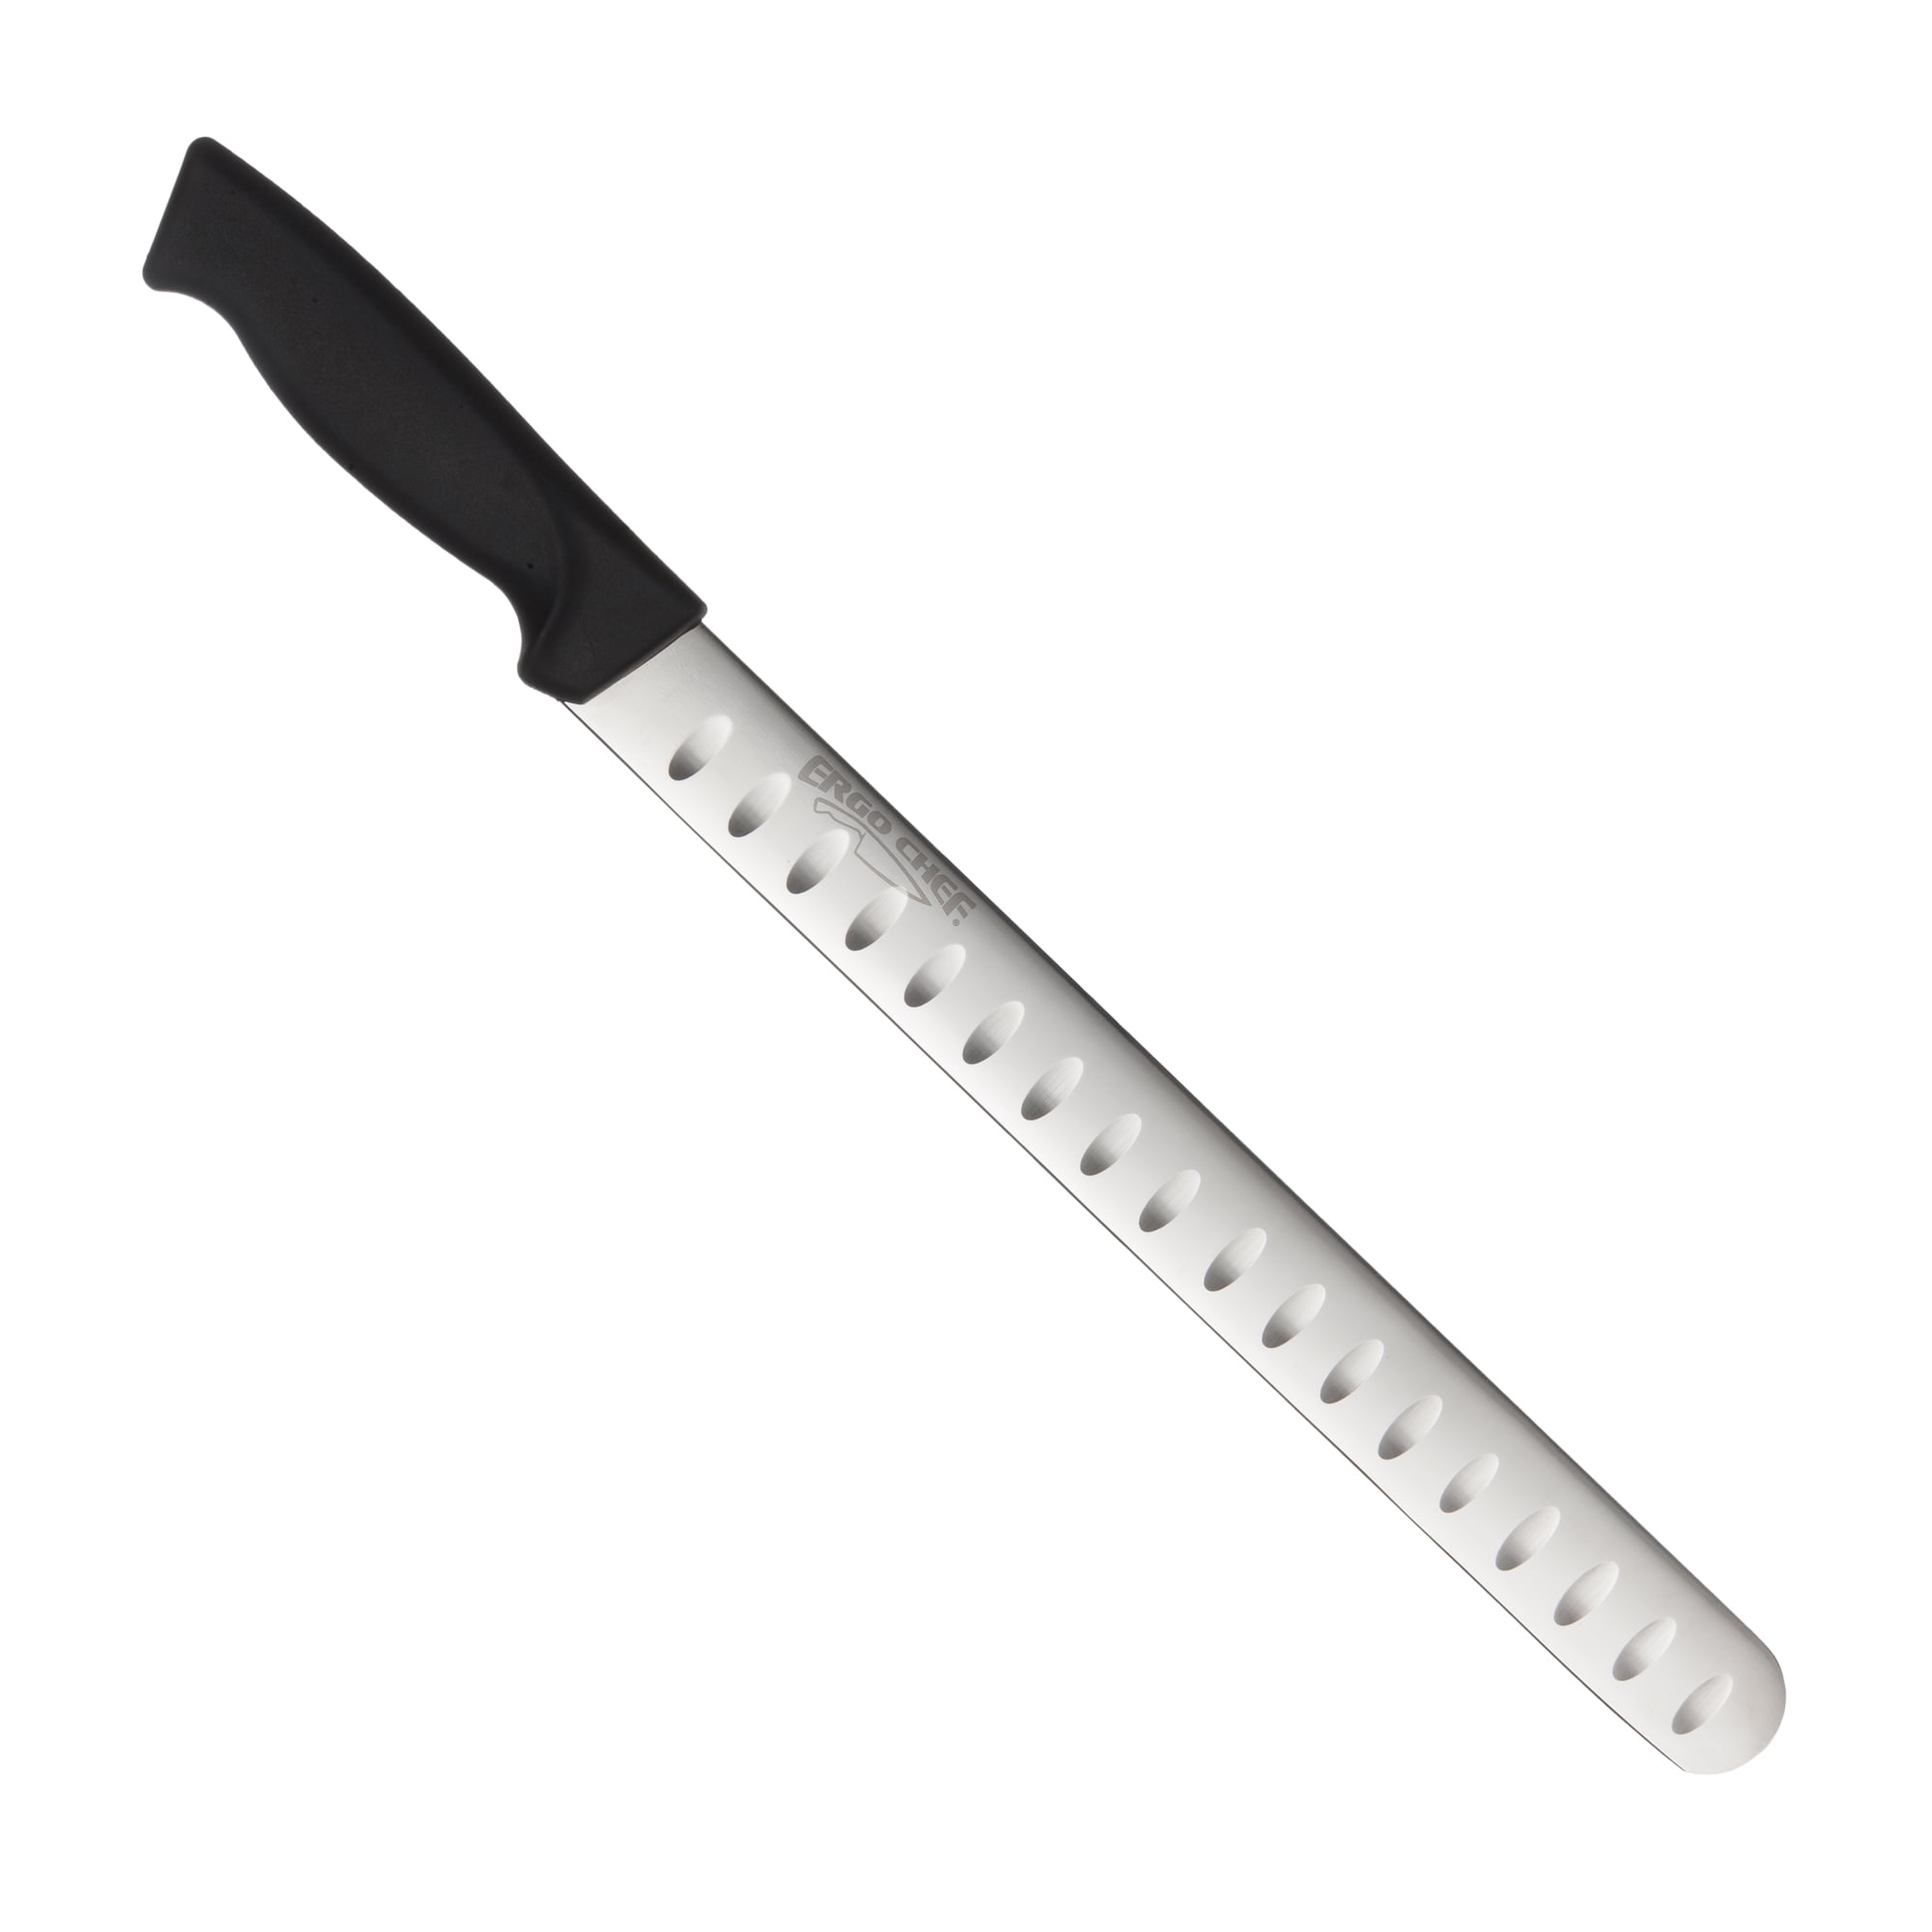 Ergo Chef Prodigy Competition Pit-Master BBQ Knife Kit - 14pc